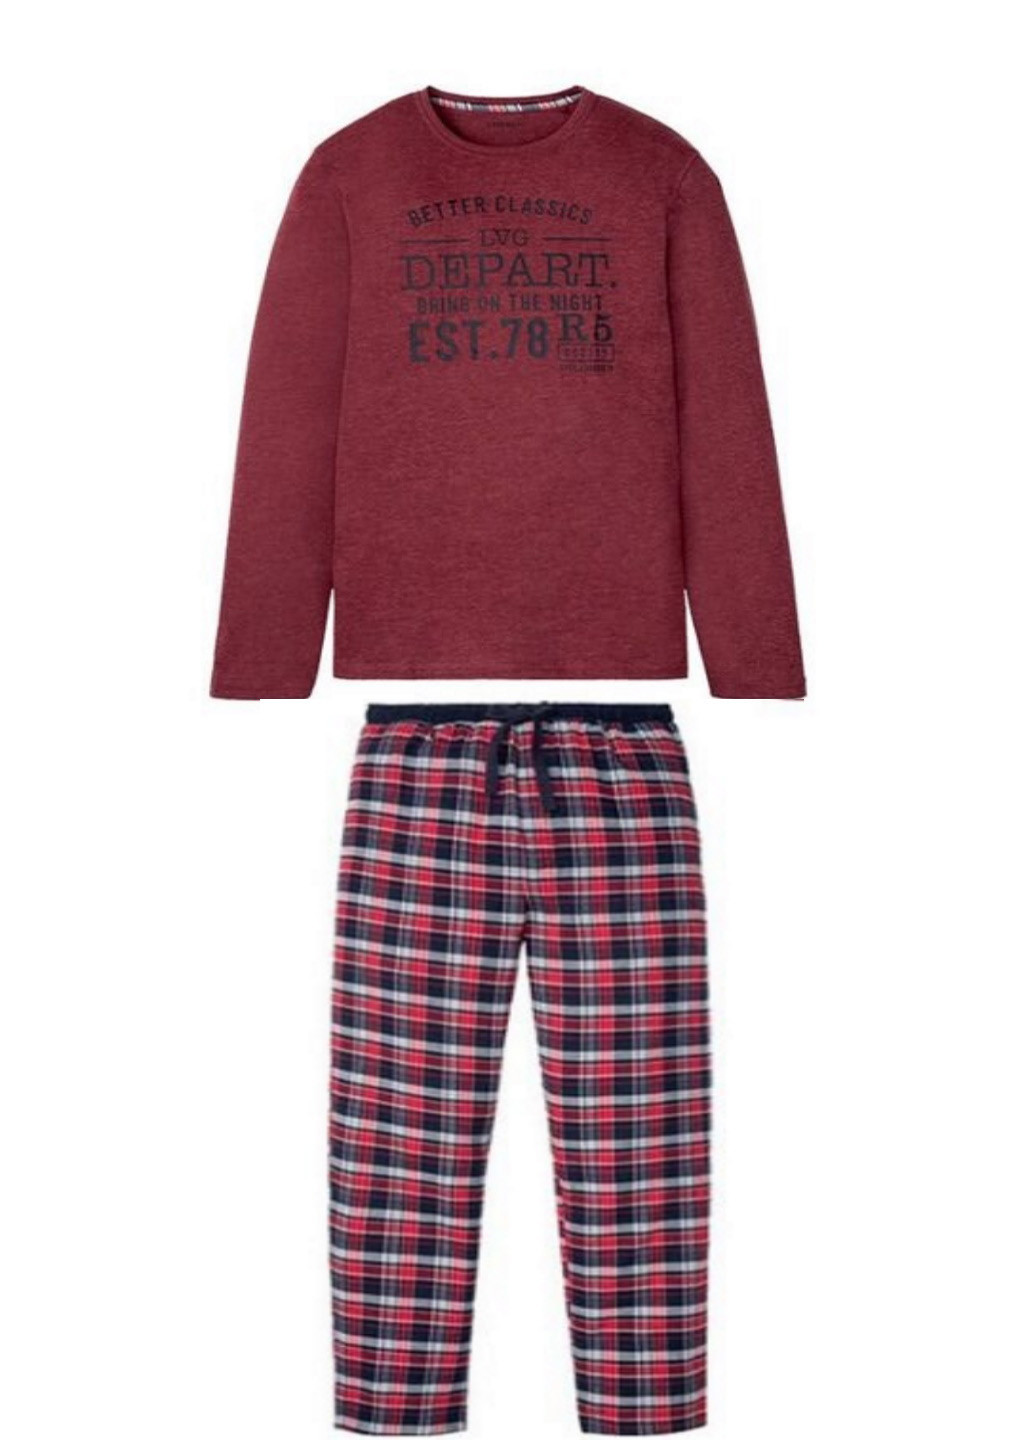 Пижама (лонгслив, брюки) Livergy лонгслив + брюки надпись бордовая домашняя трикотаж, хлопок